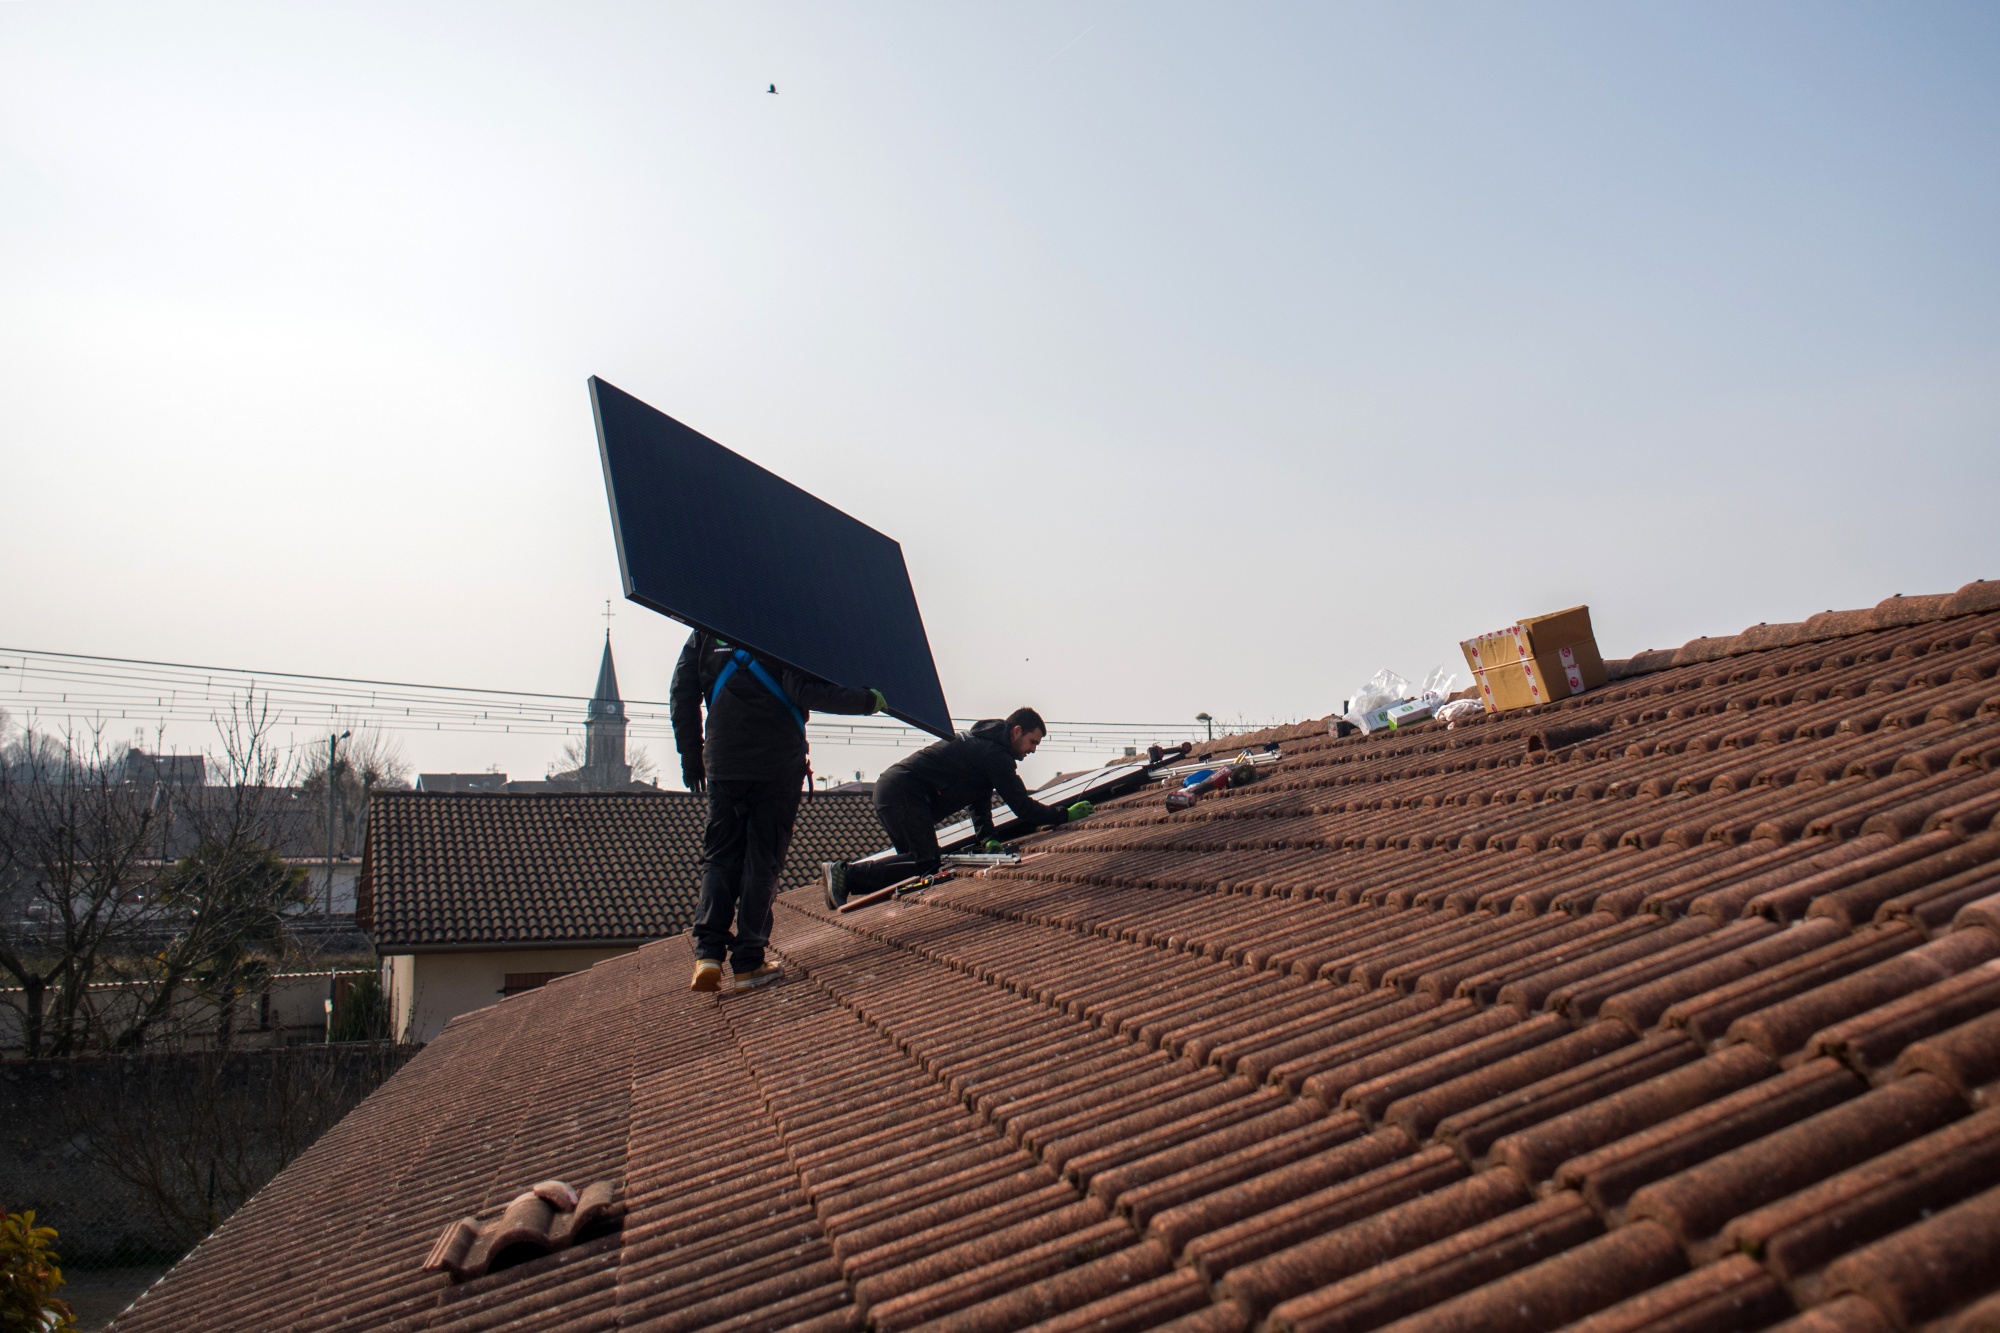 Engineers fix solar panels onto a roof in Saint Denis en Bugey, France.